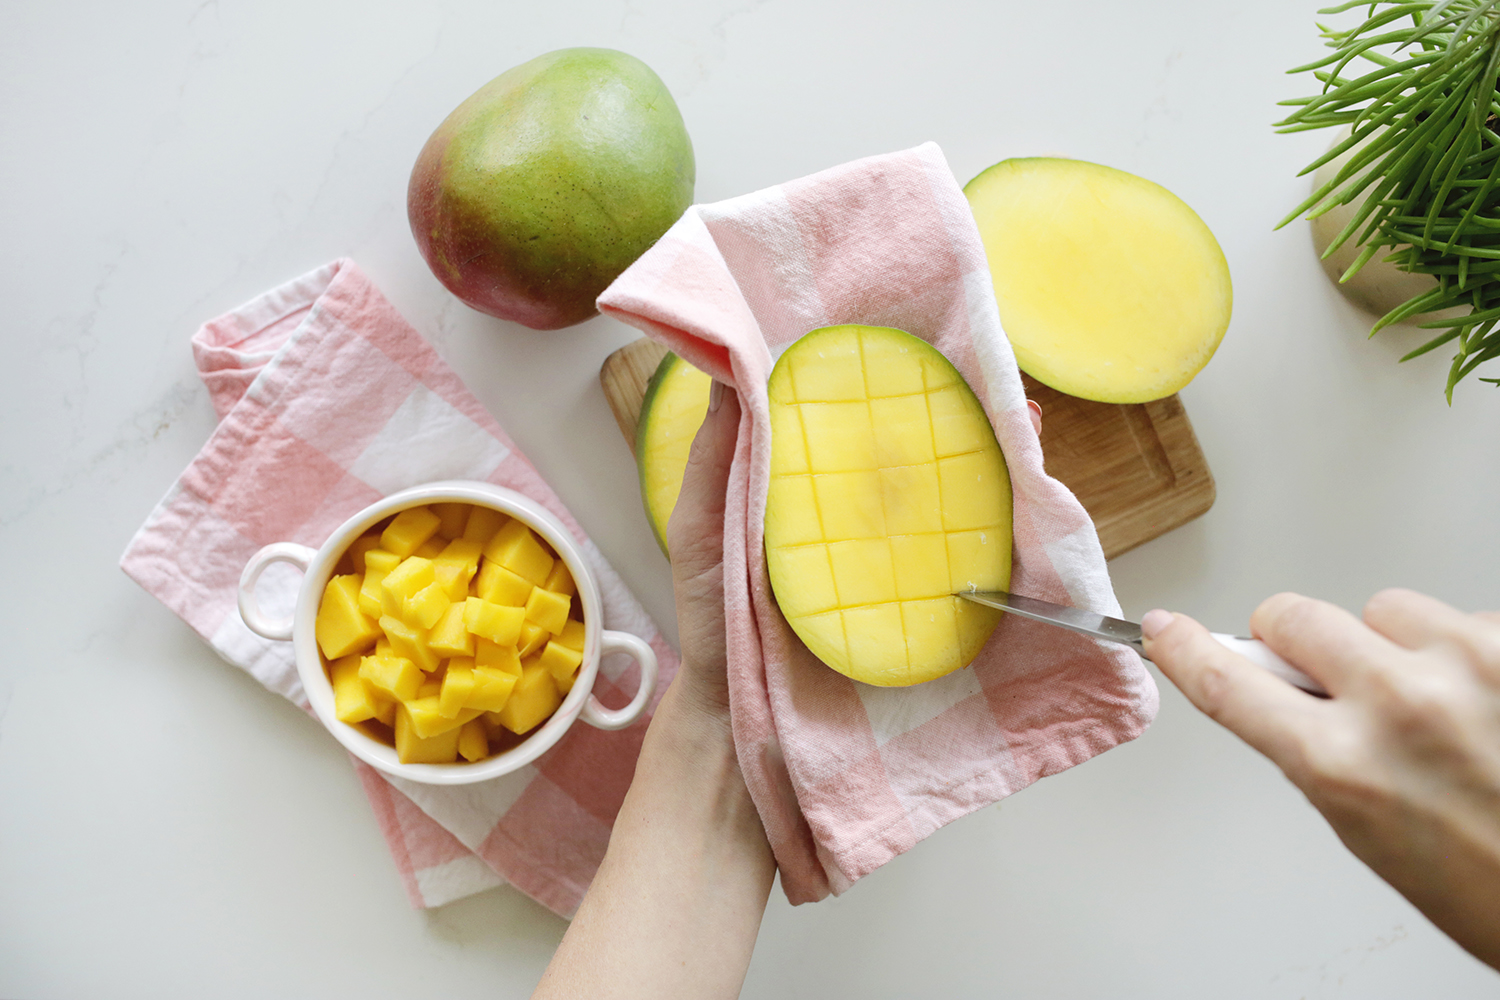 Hand cutting into half a mango